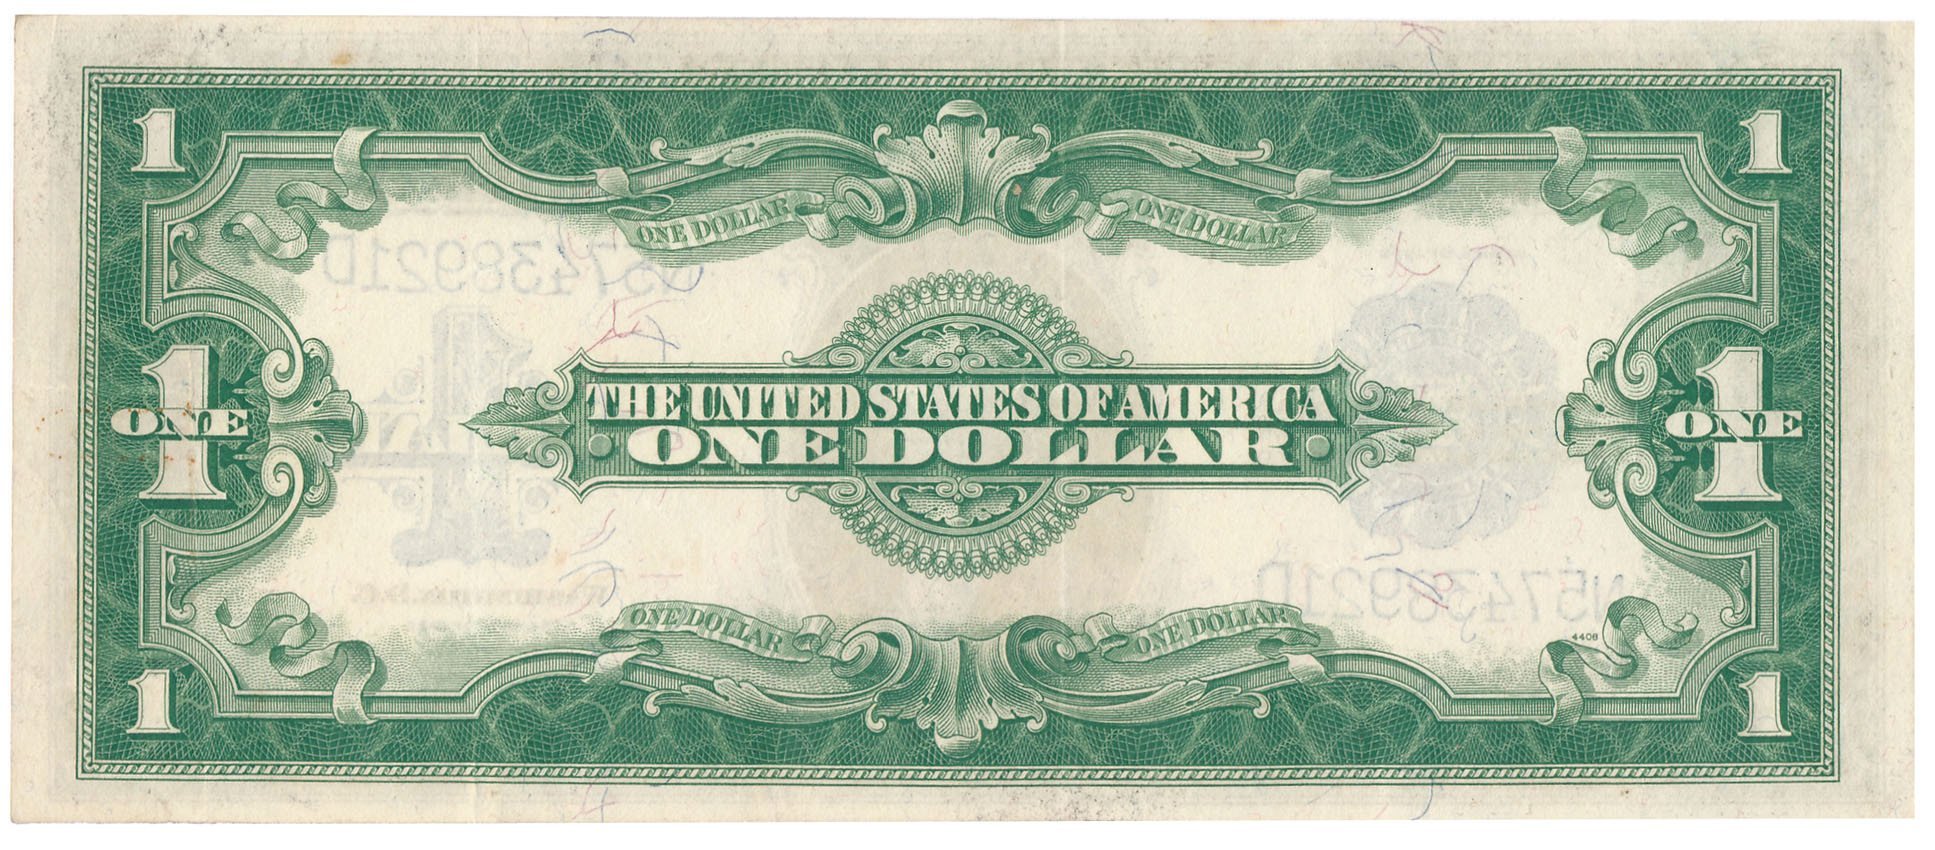 USA. Dolar 1923 seria ND